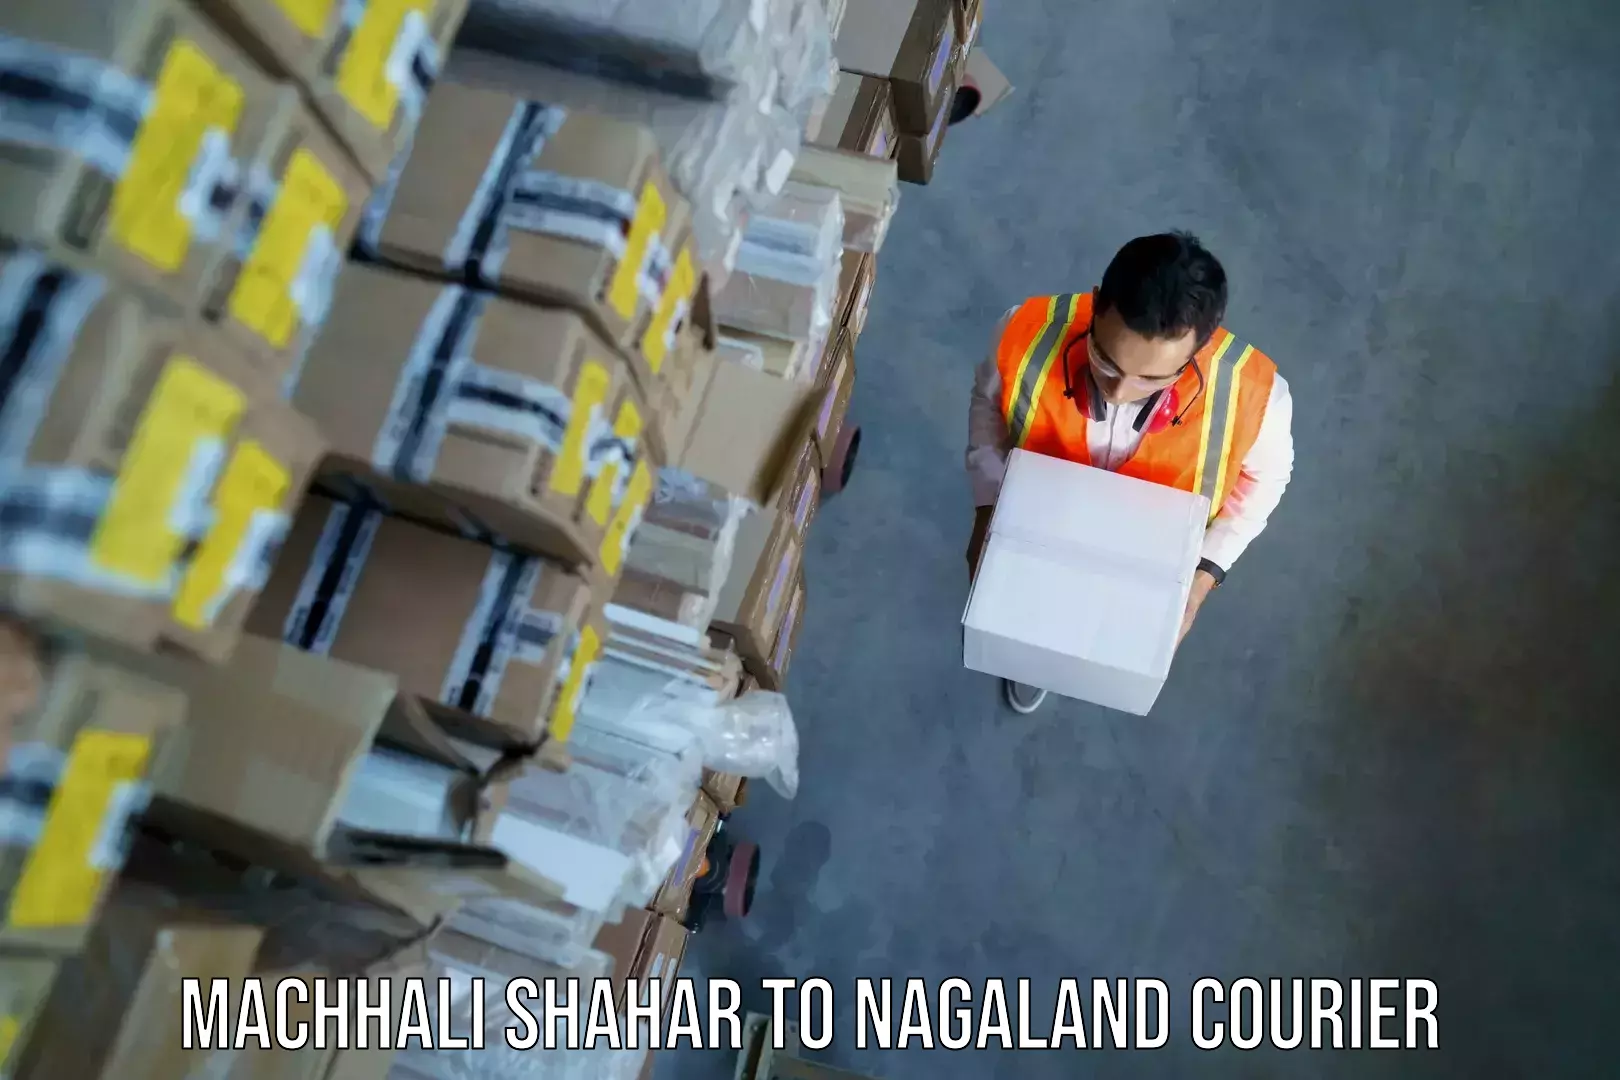 Baggage transport network Machhali Shahar to Nagaland